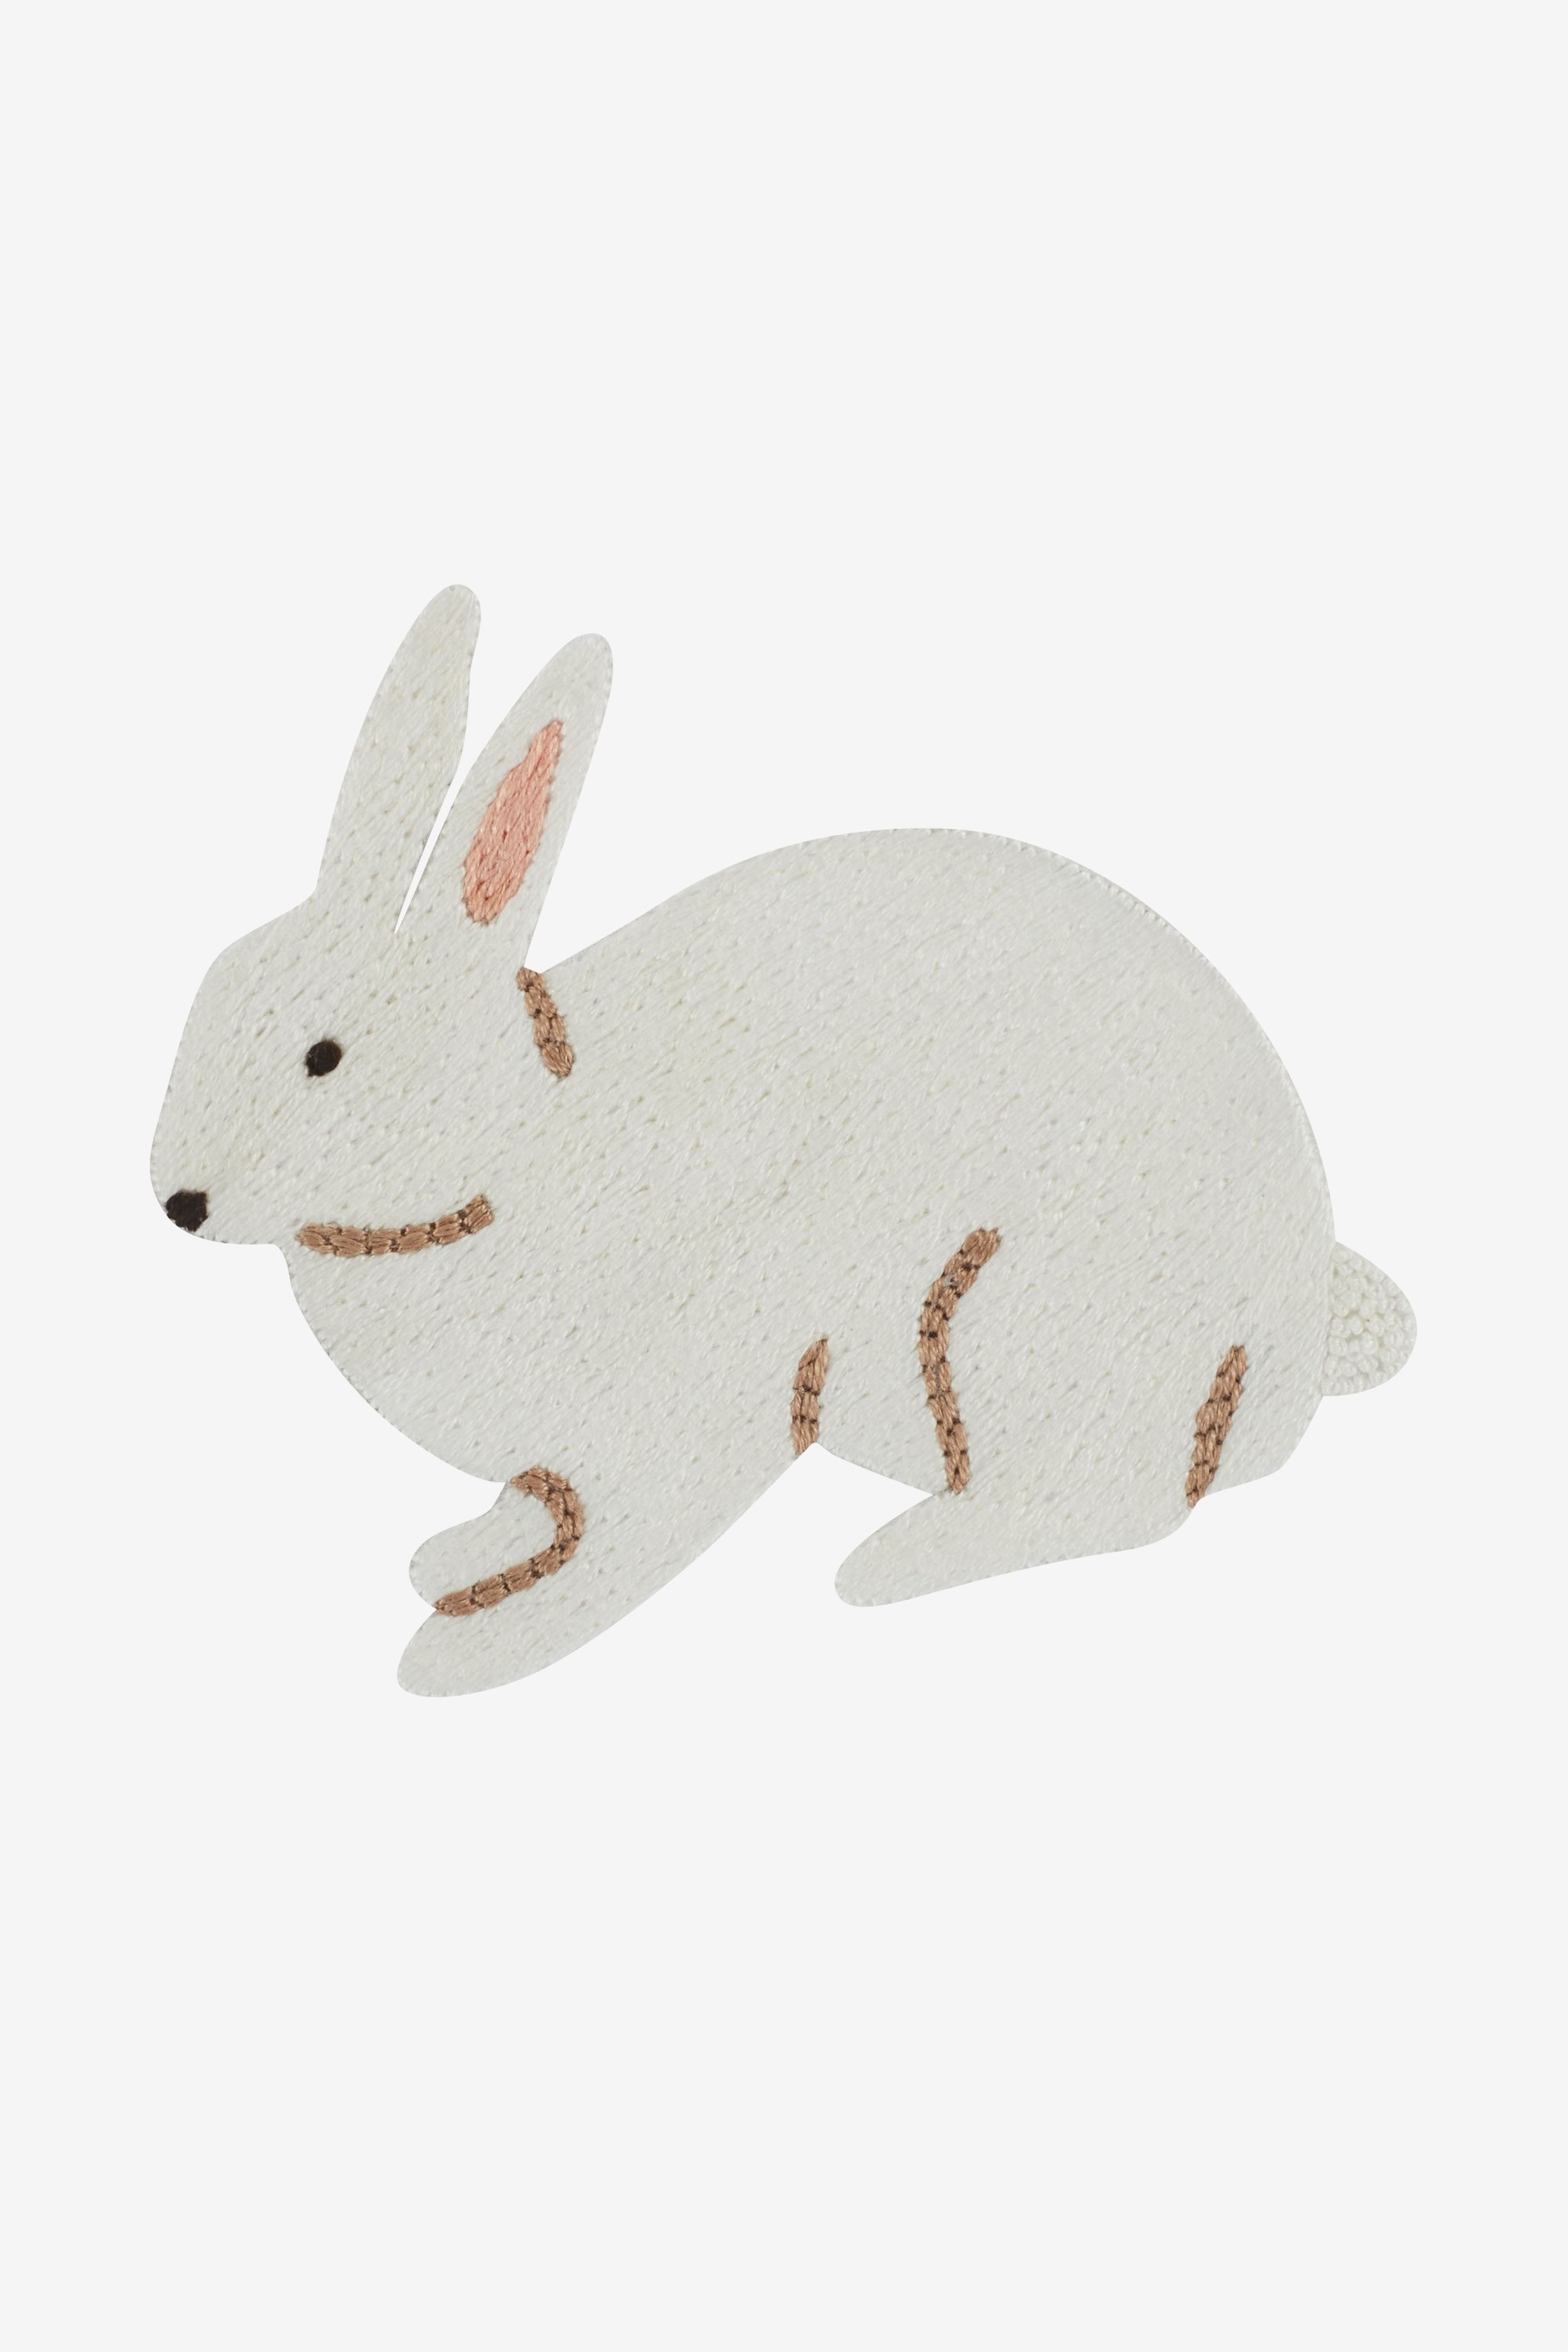 Rabbit Pattern Free Embroidery Patterns Dmc